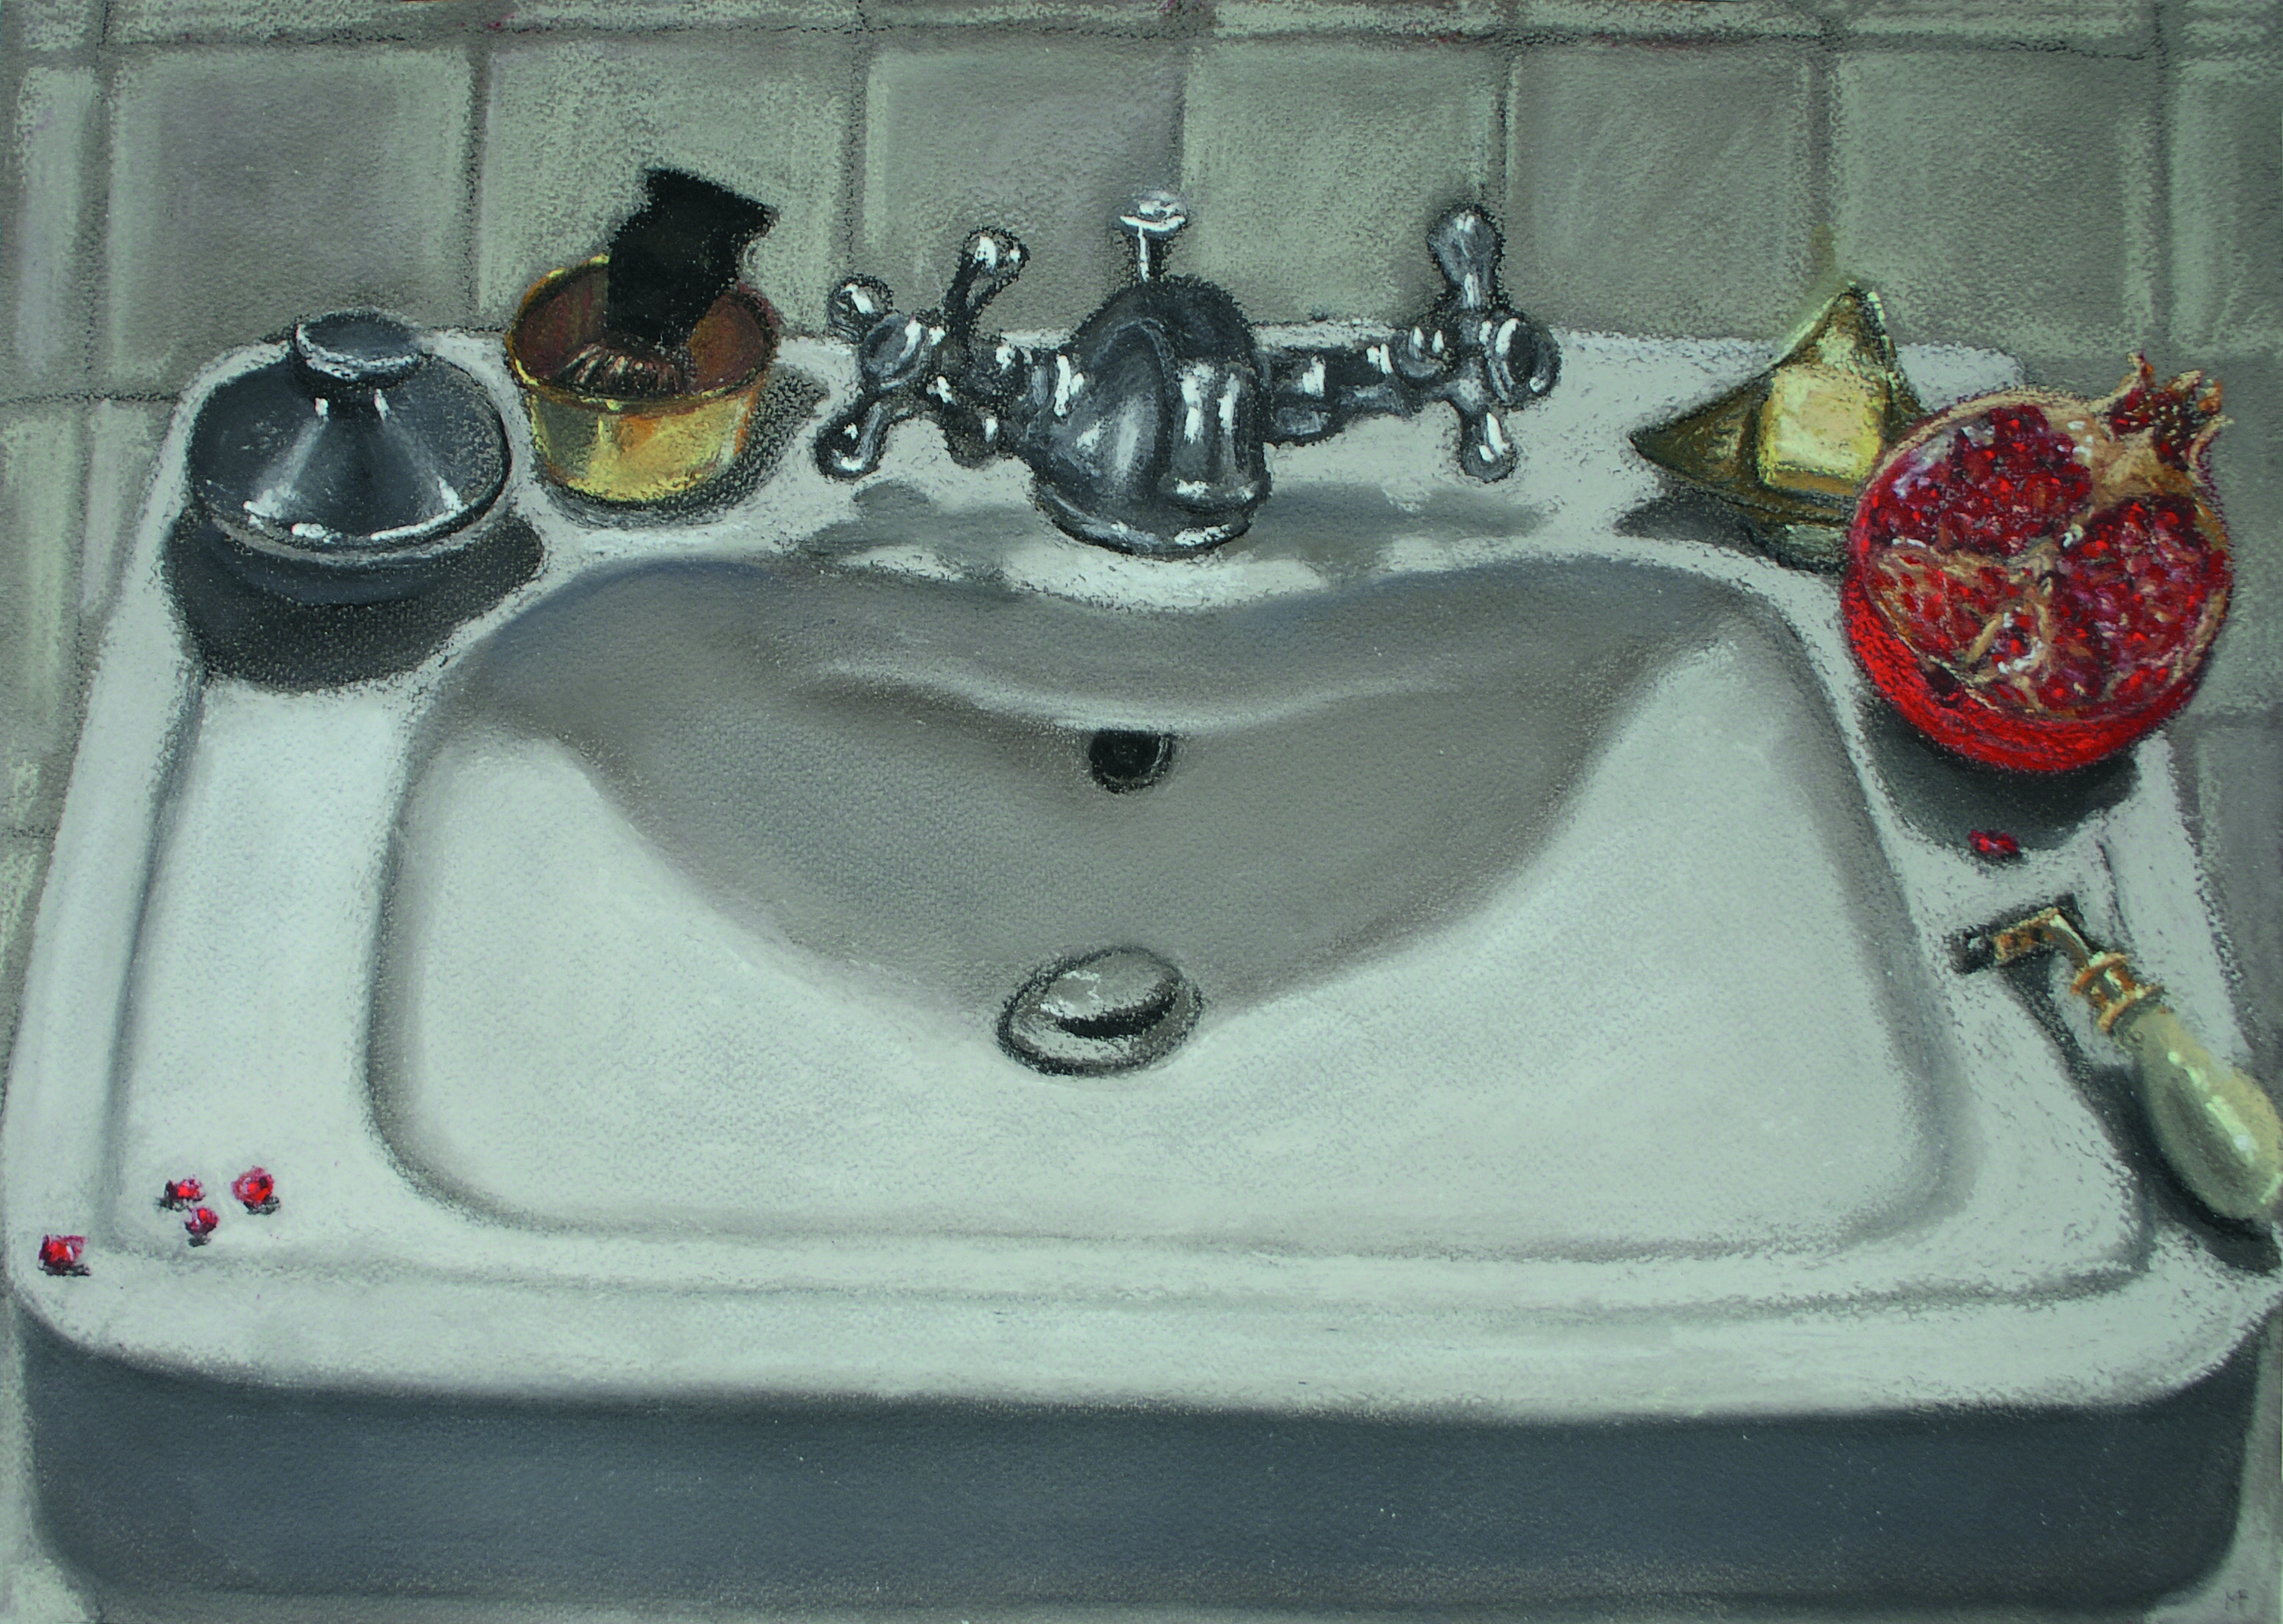 B 15)Lavabo, 2010, pastello su carta Ingres, cm 35 x 50